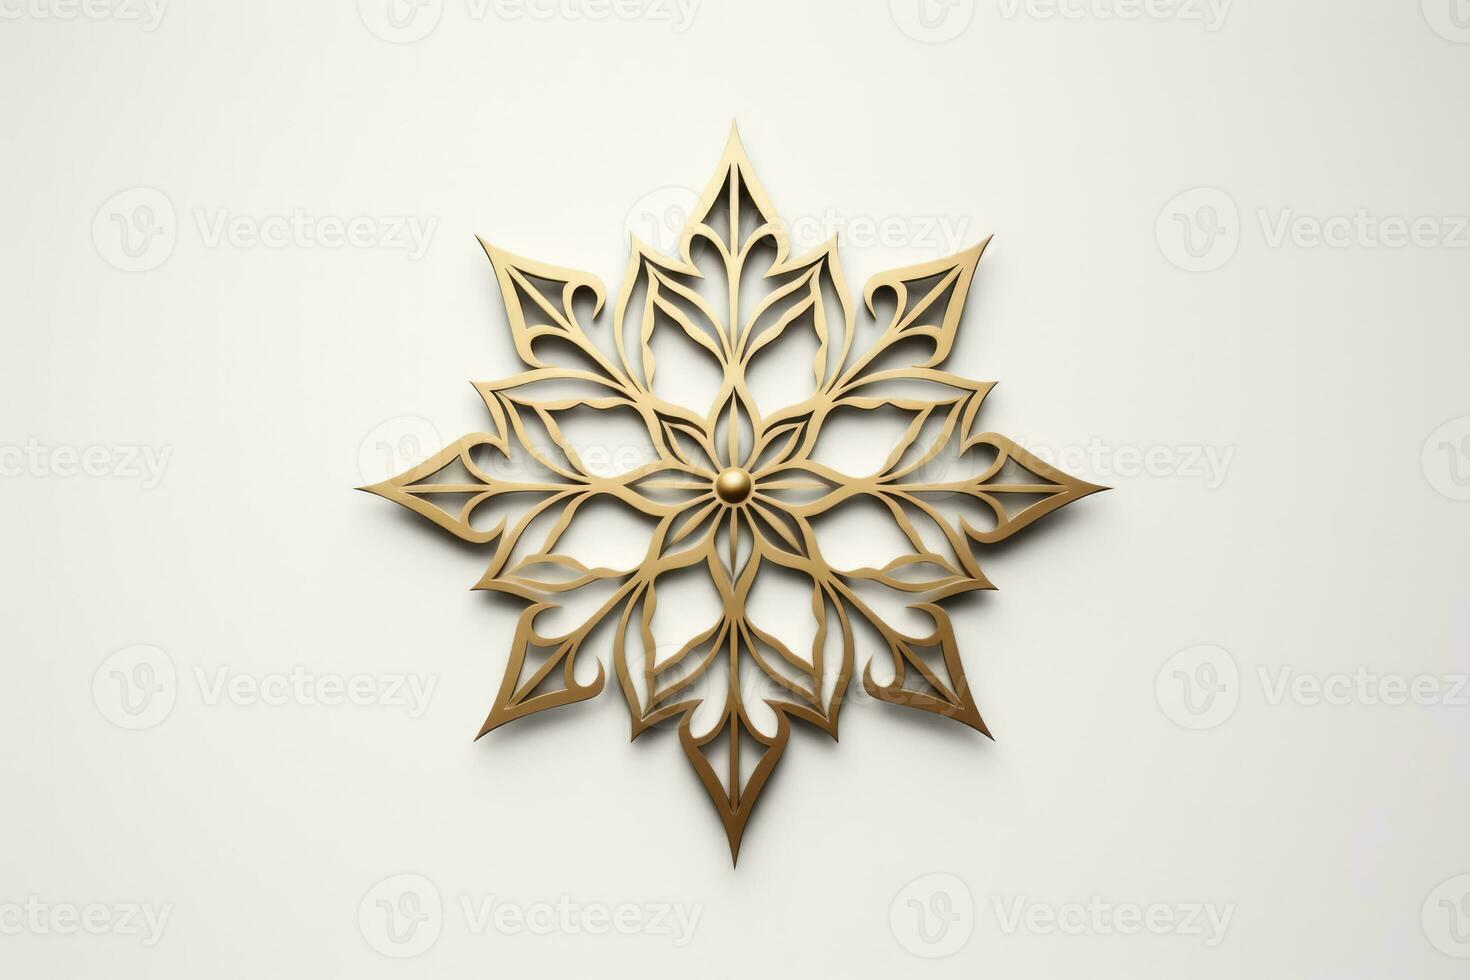 Arabic geometric star ornament on white background photo